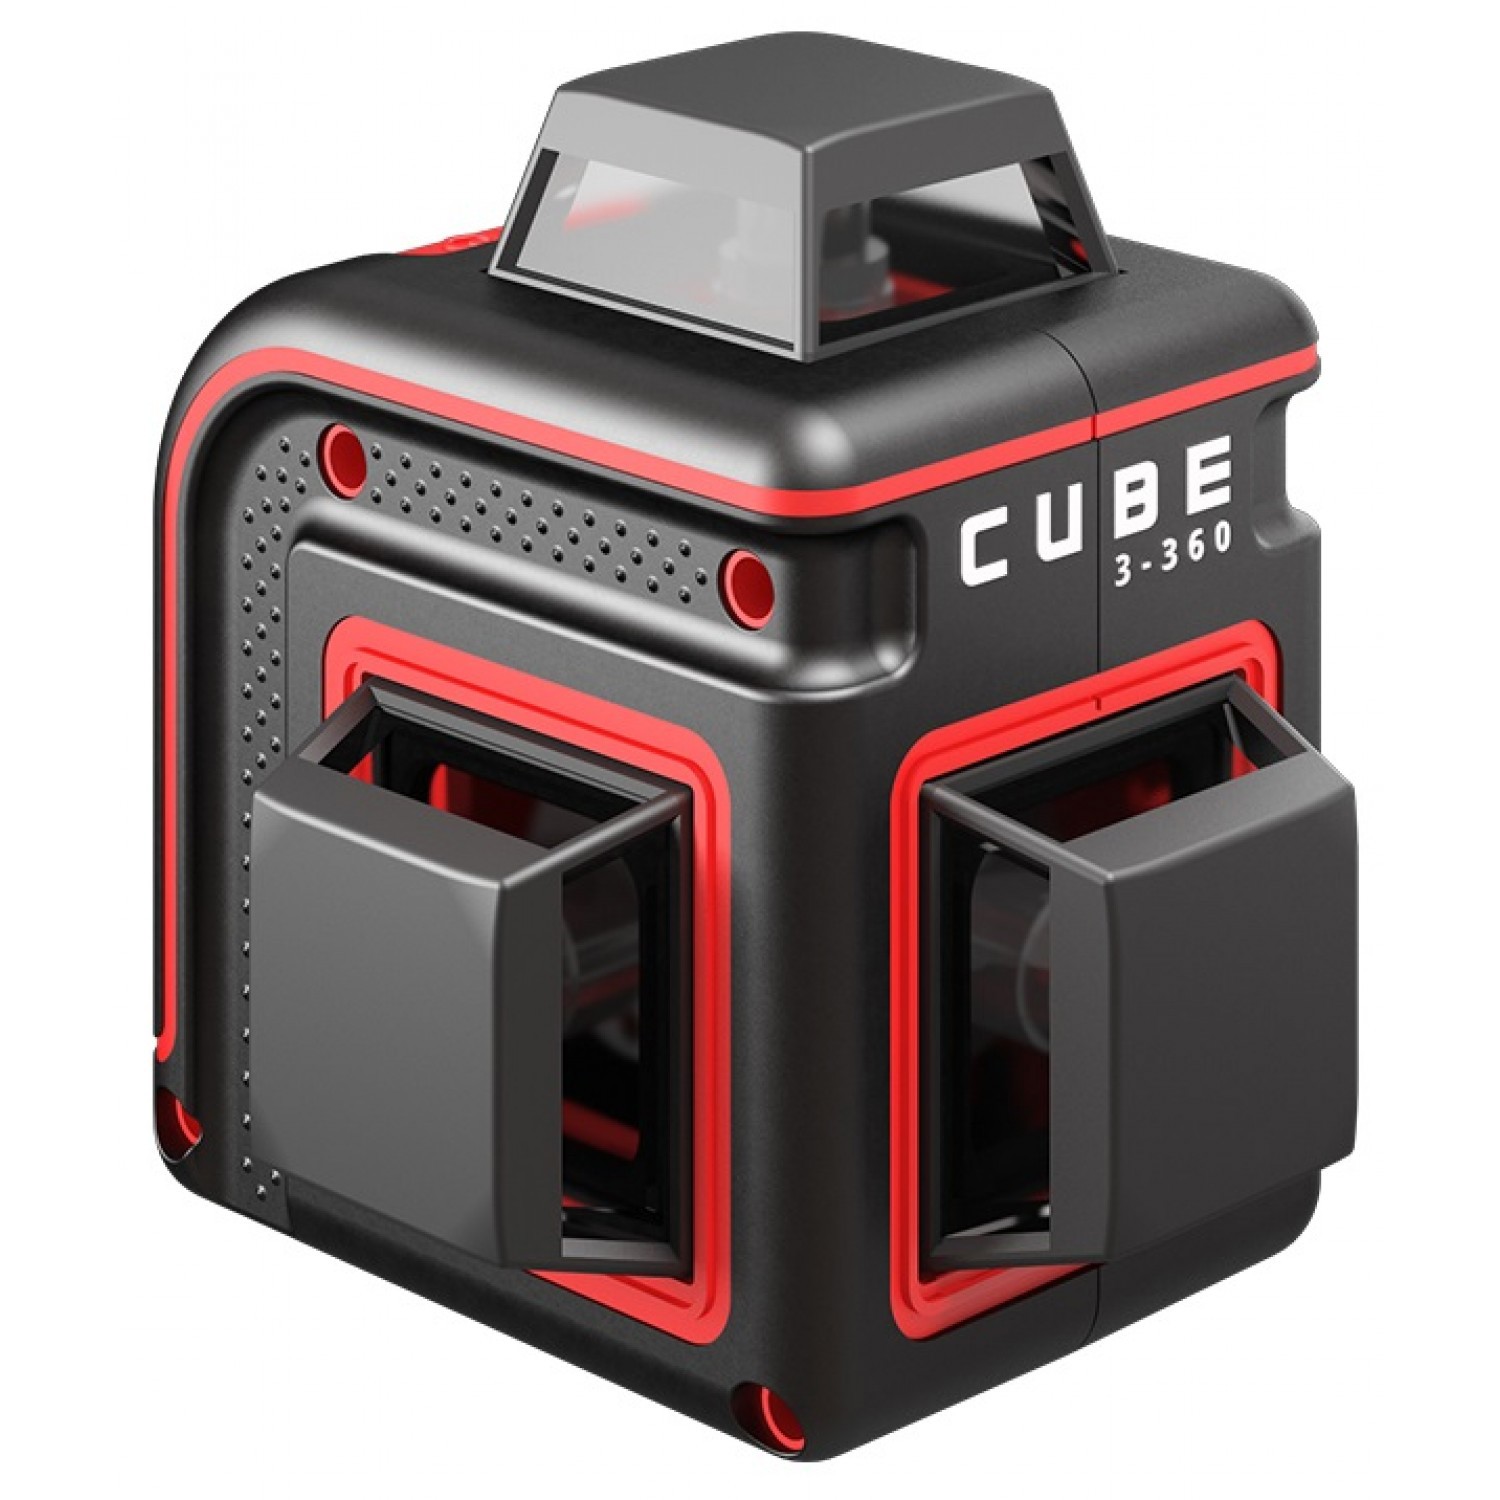 Ada instruments cube. Лазерный уровень ada Cube 3-360 Home Edition а00565. Нивелир лазерный ada Cube 360 professional Edition. Лазерный уровень ada Cube 360 Basic Edition. Лазерный уровень ada Cube 3-360 Green Basic Edition.